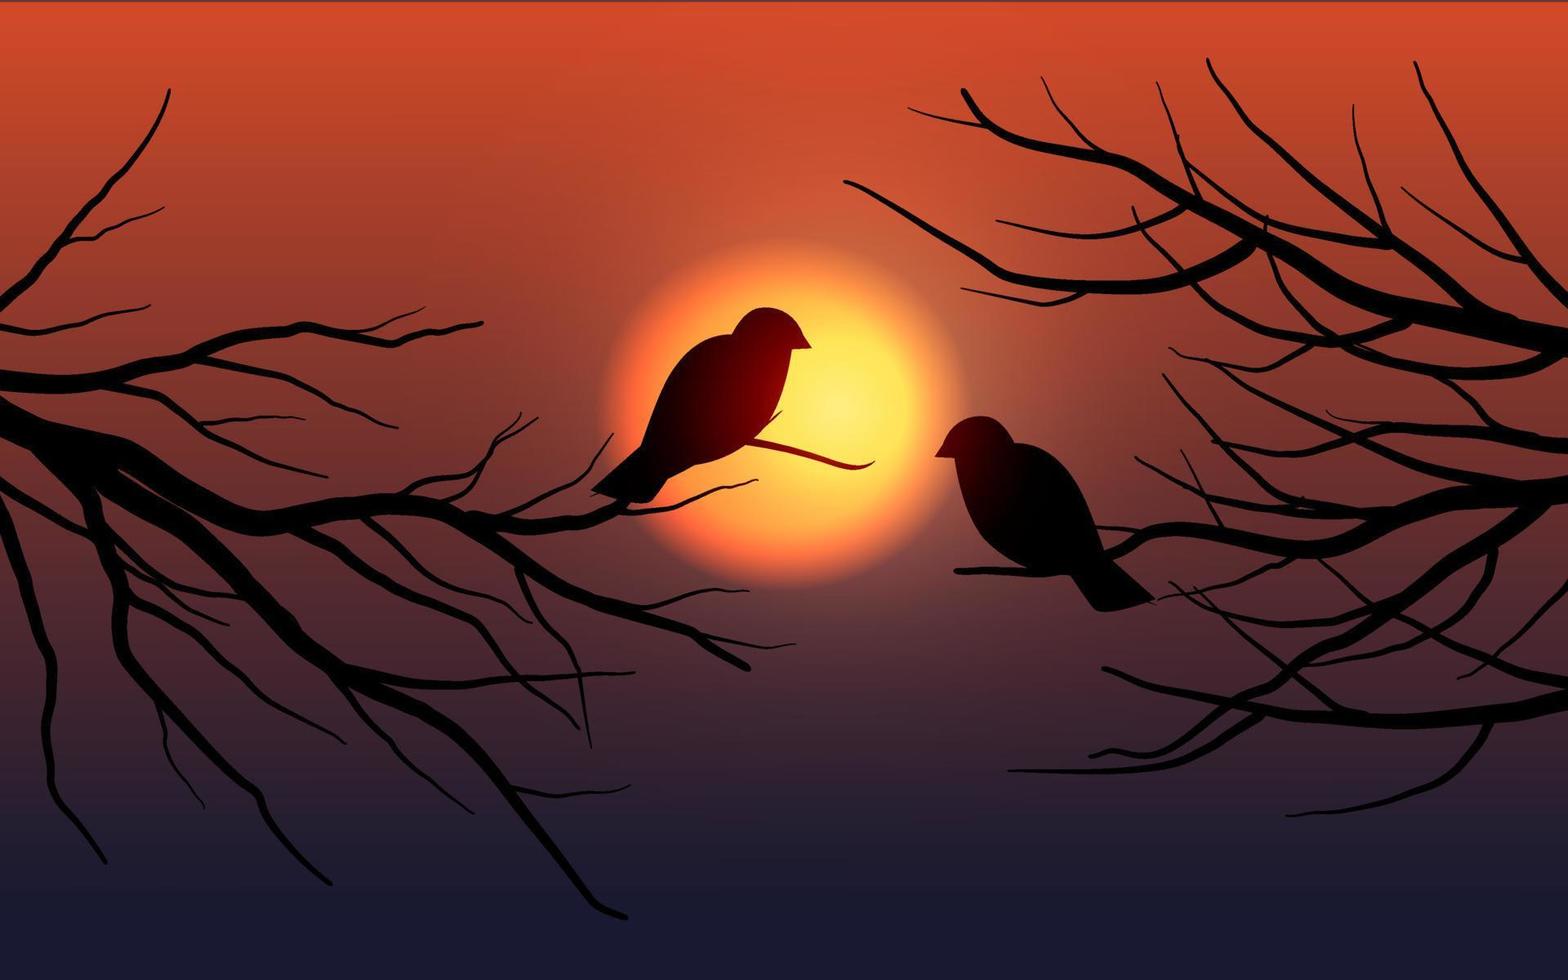 Birds silhouette on sunset background vector